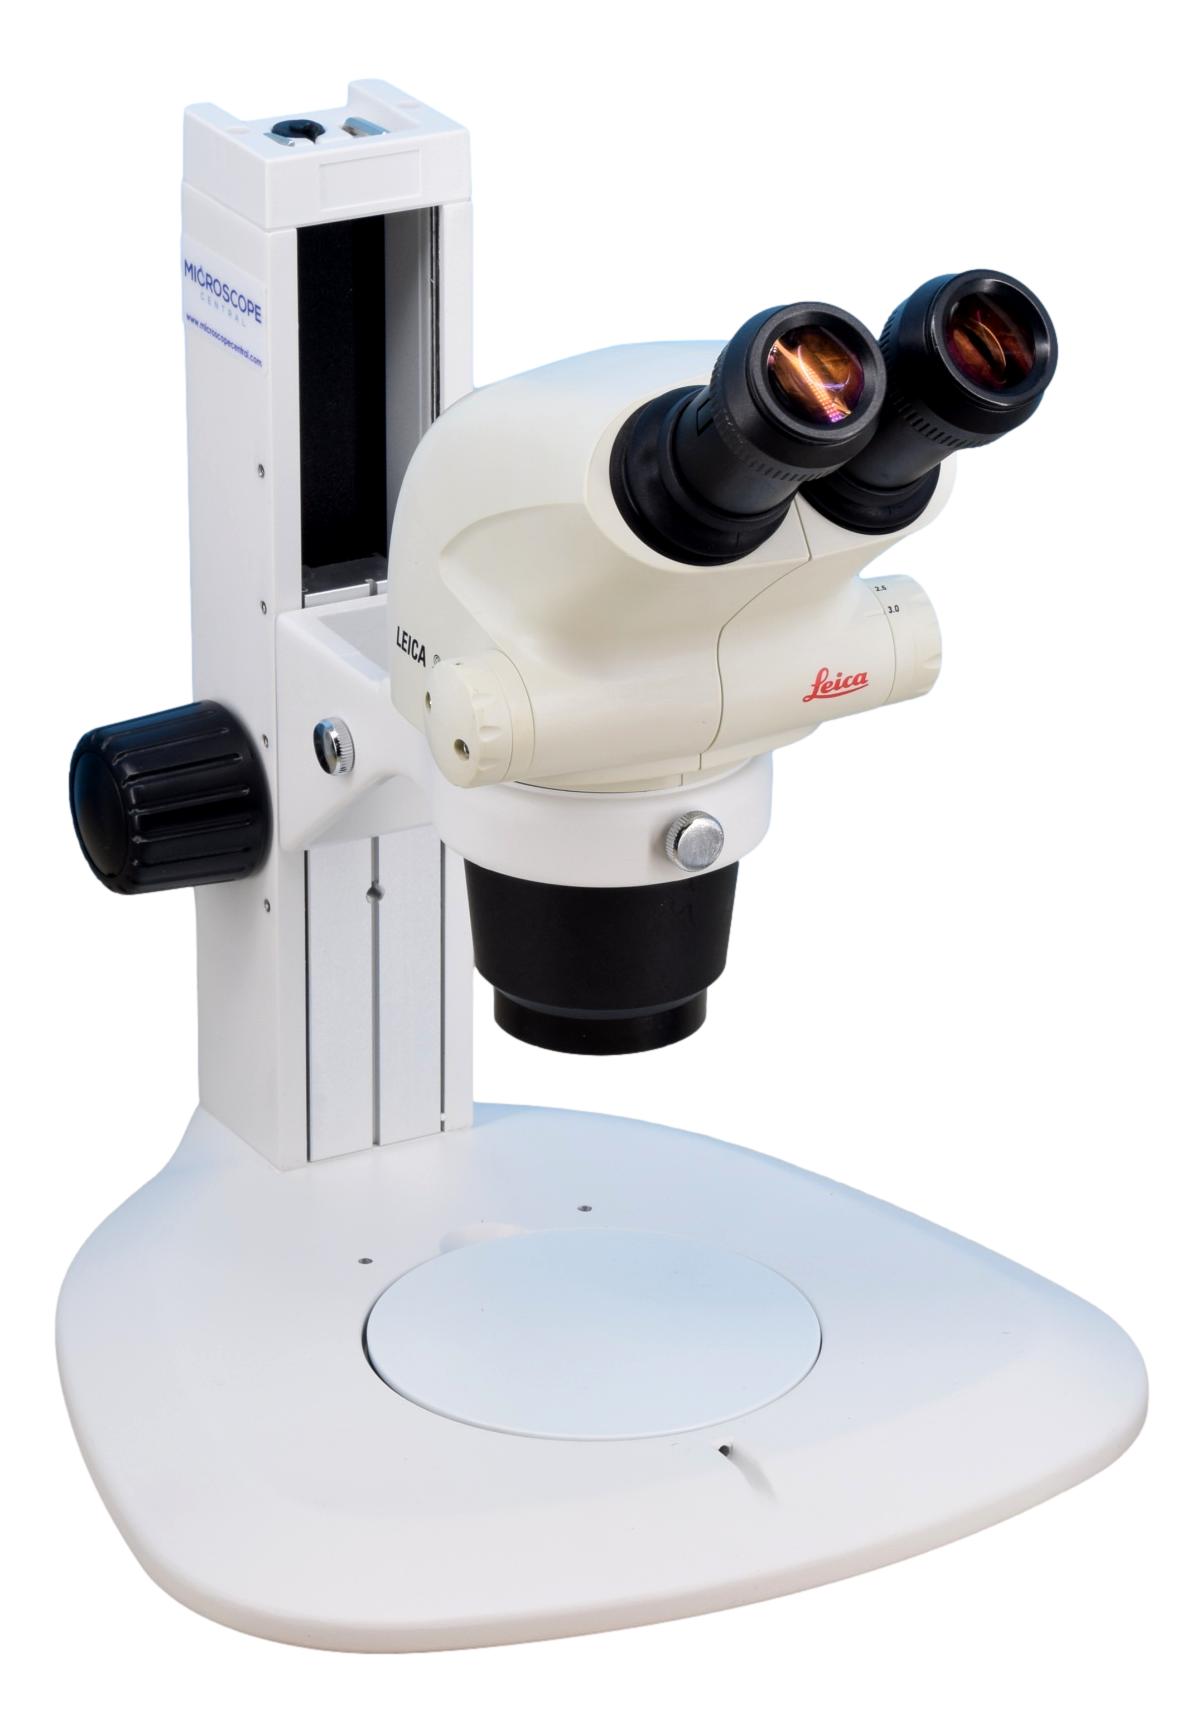 Leica S4 E Stereo Zoom Microscope 6.3x -30x